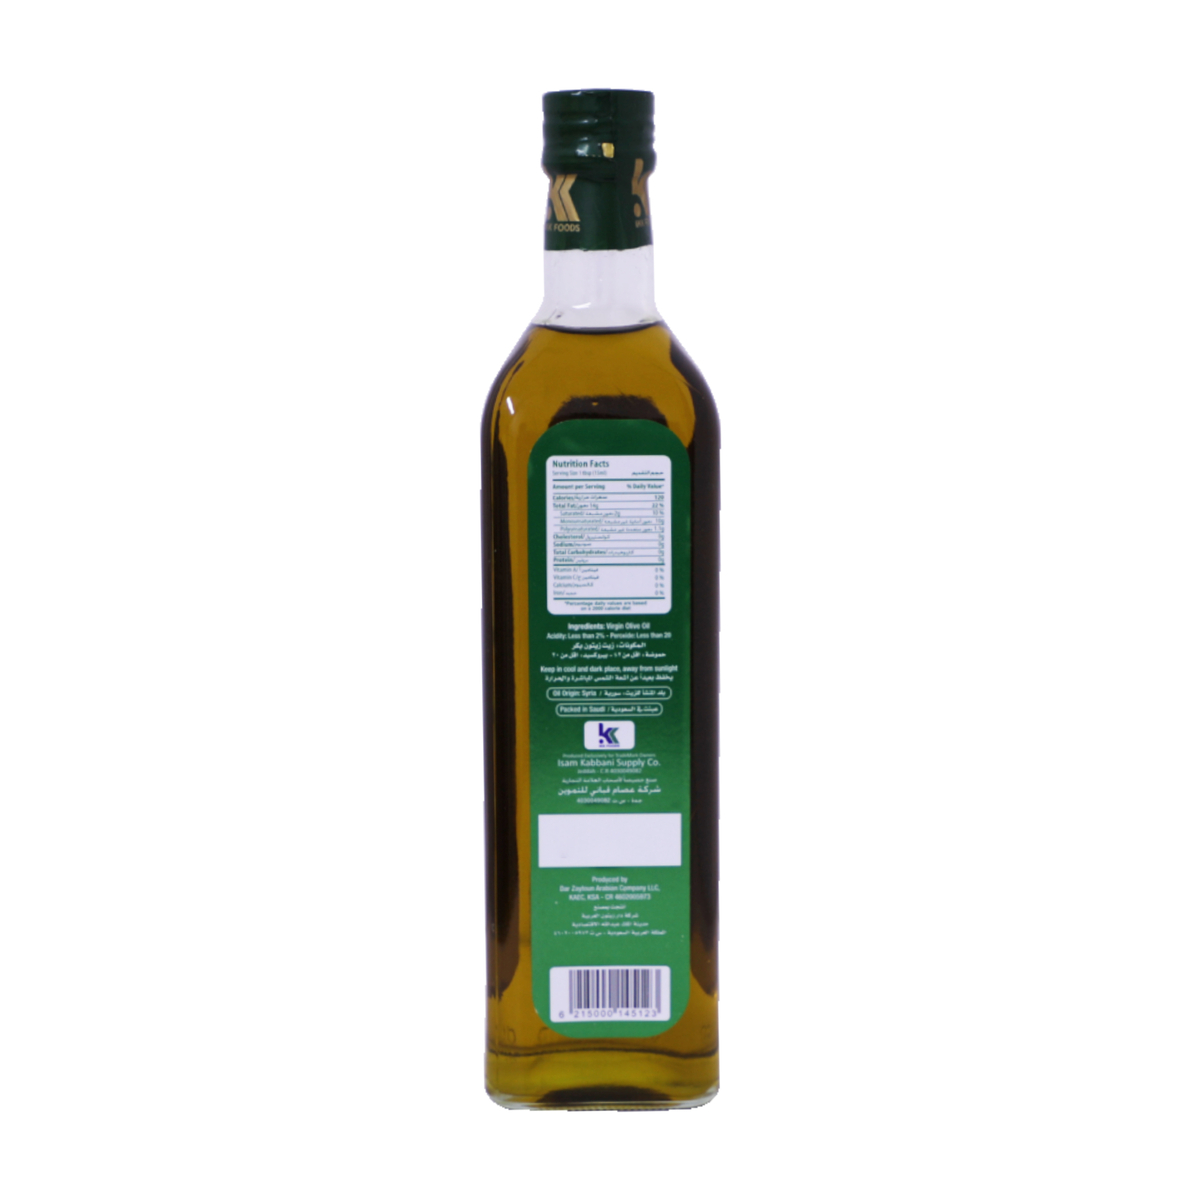 Al Sawsan Syrian Virgin Olive Oil 750ml Online at Best Price | Olive ...